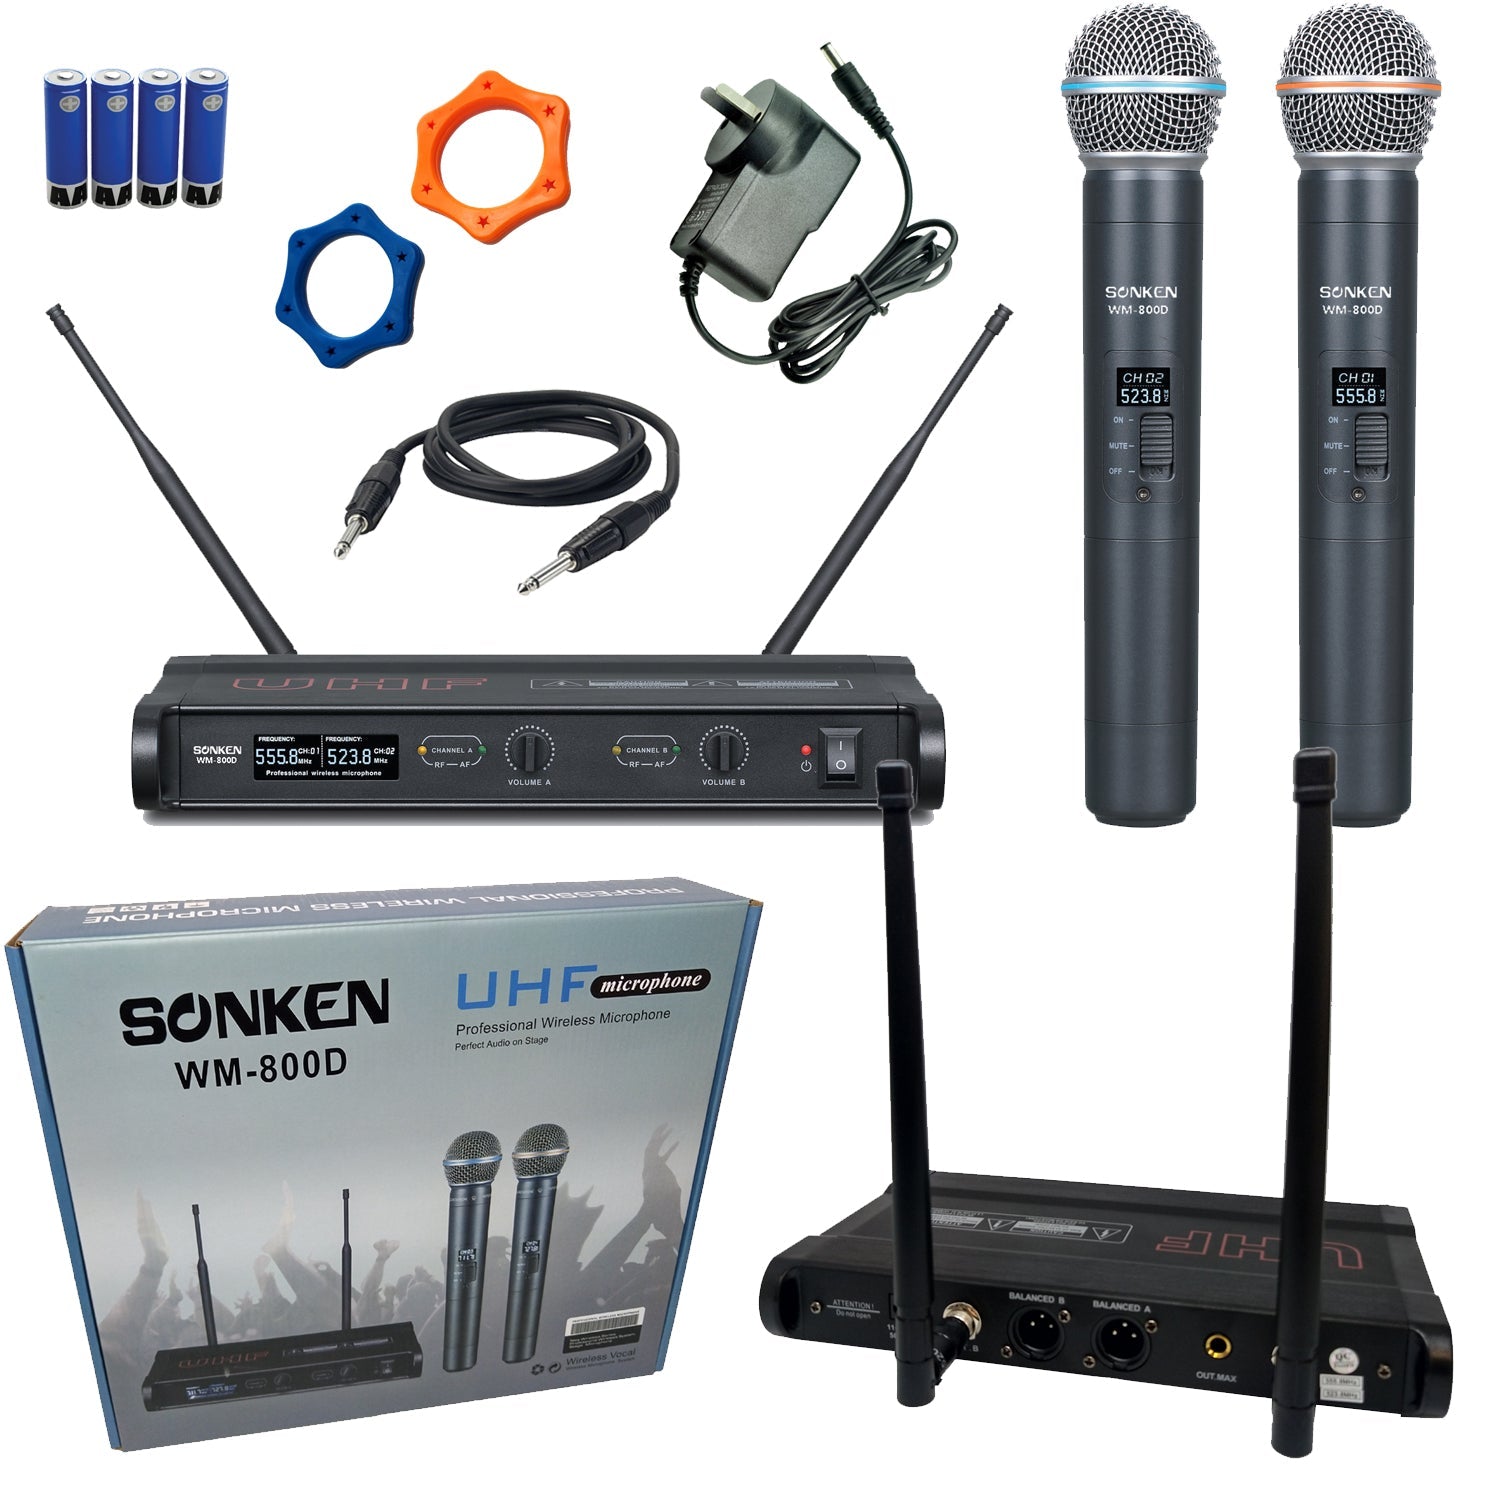 Sonken Home Karaoke Studio Package Deal (SA-720 Amp + CS-612 (12") Speakers + WM-800D Wireless Mics) - Karaoke Home Entertainment